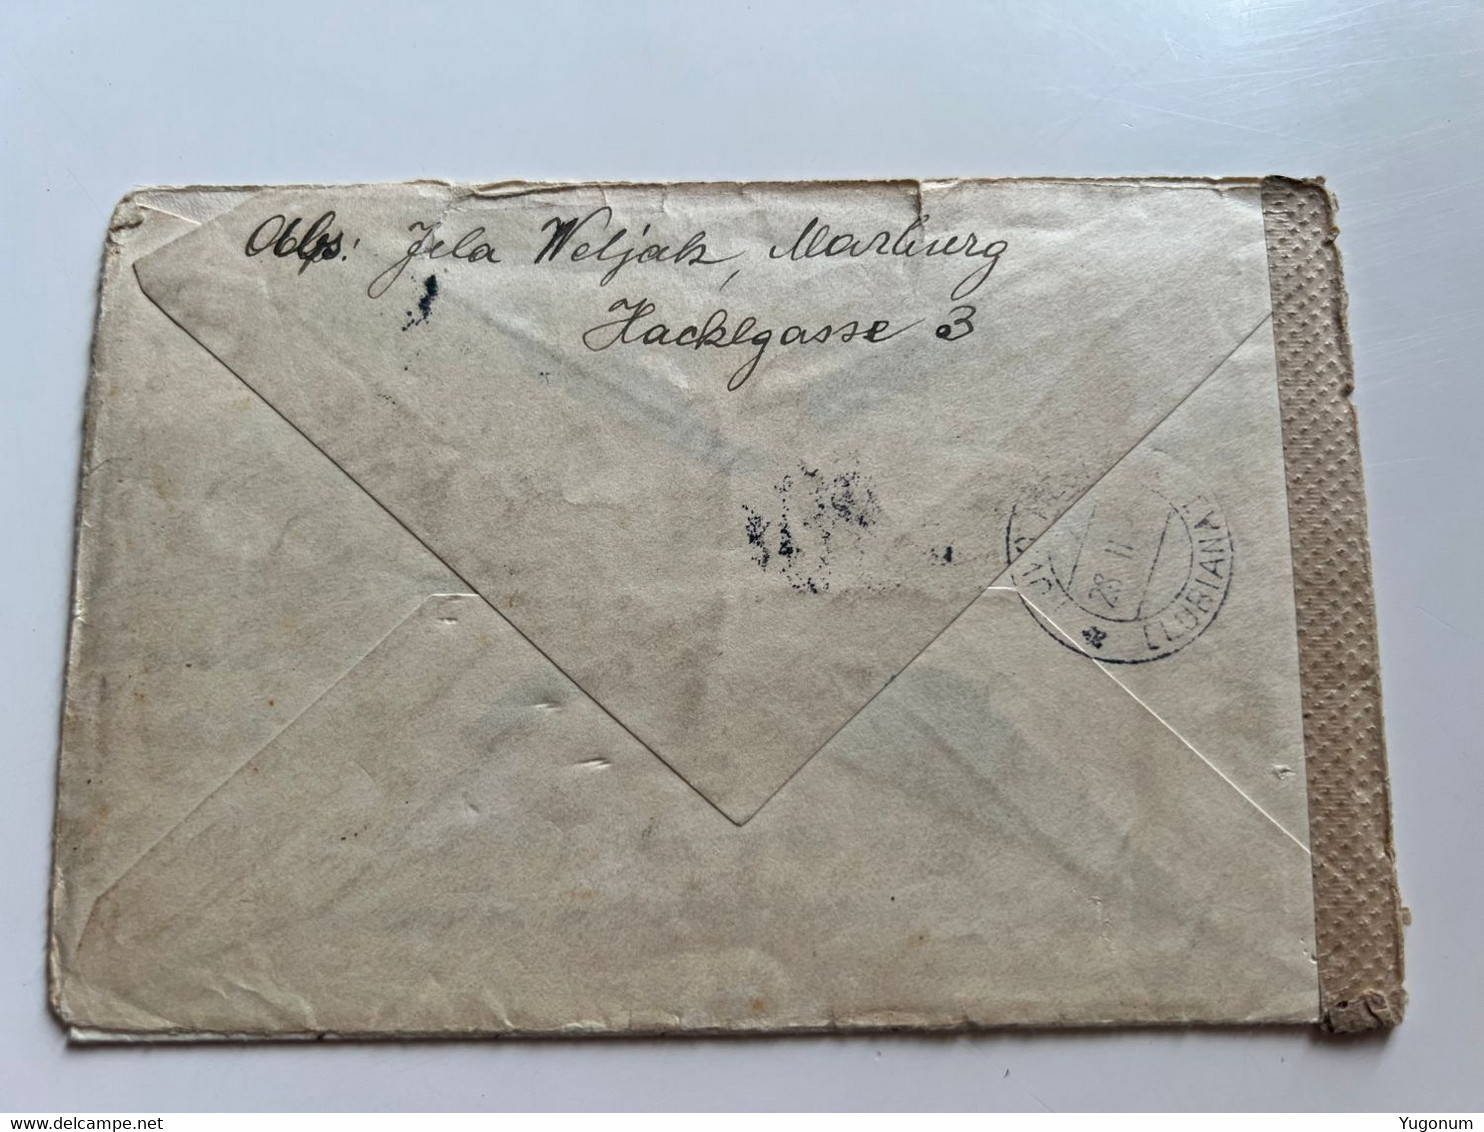 WWII Slovenia 1943 Letter With Stamp MARBURG Sent To Lubiana Ljubljana (No 571) - Lubiana